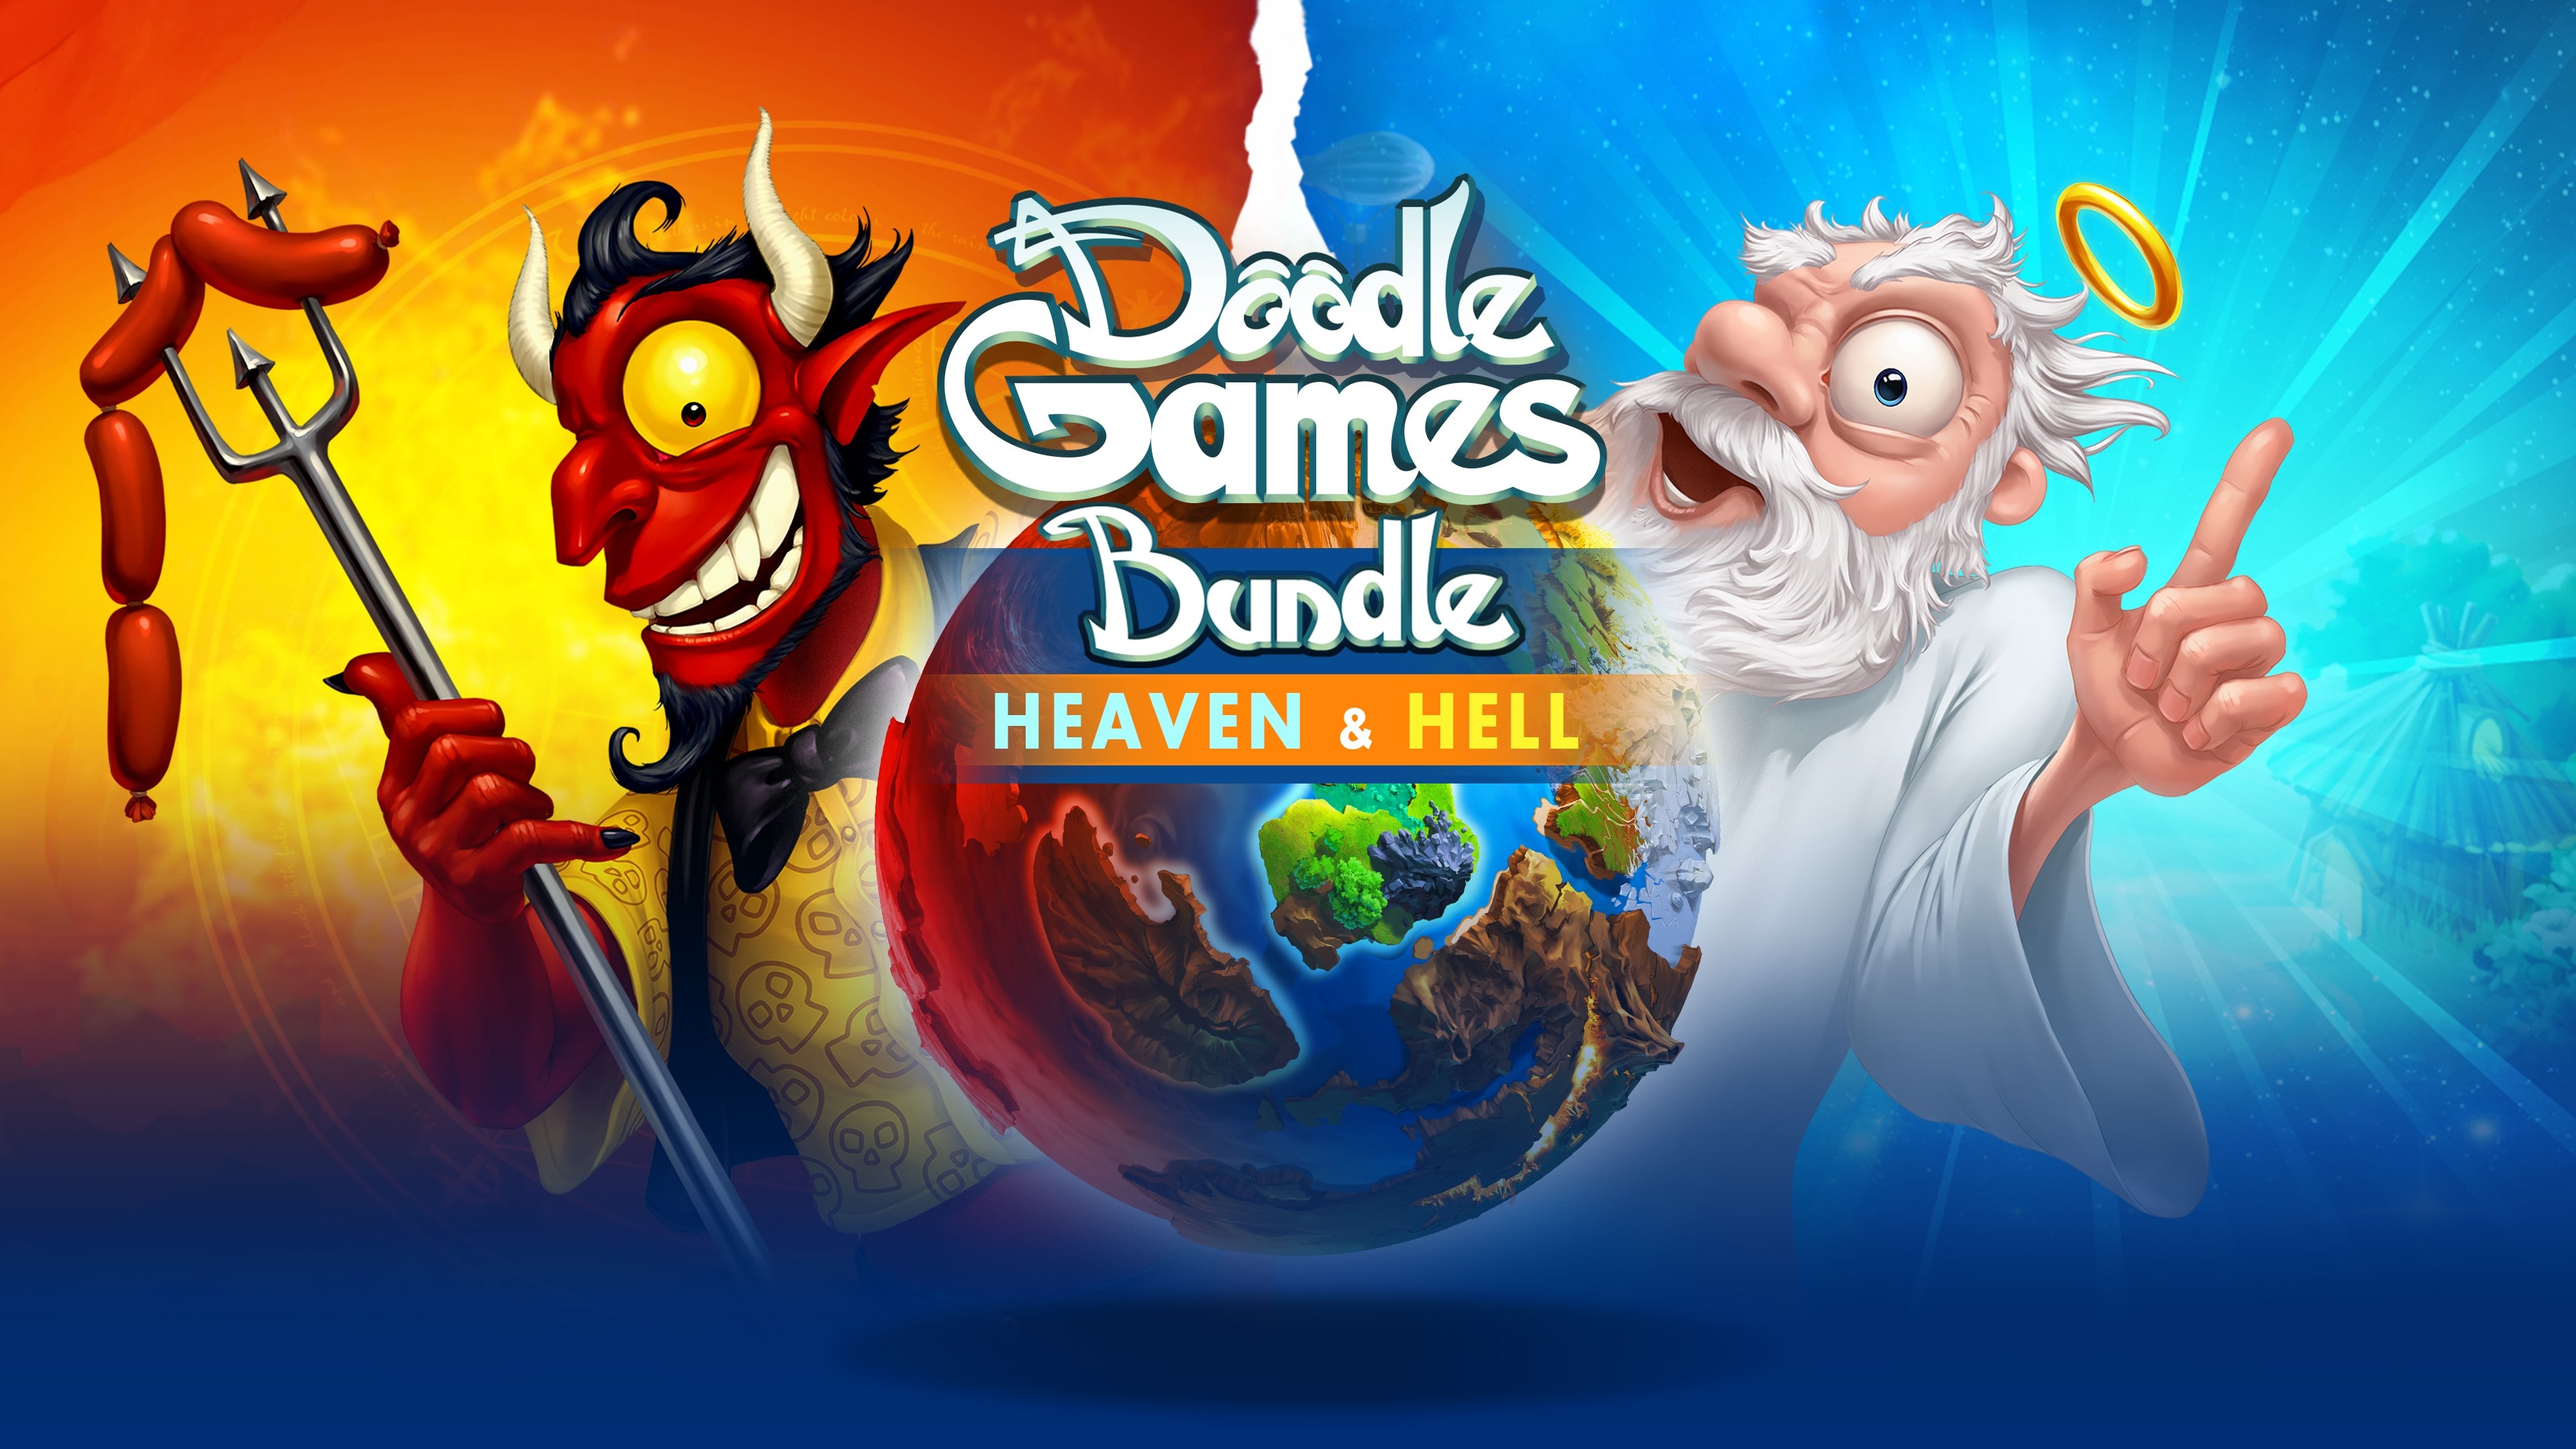 Doodle Games Bundle: Heaven & Hell